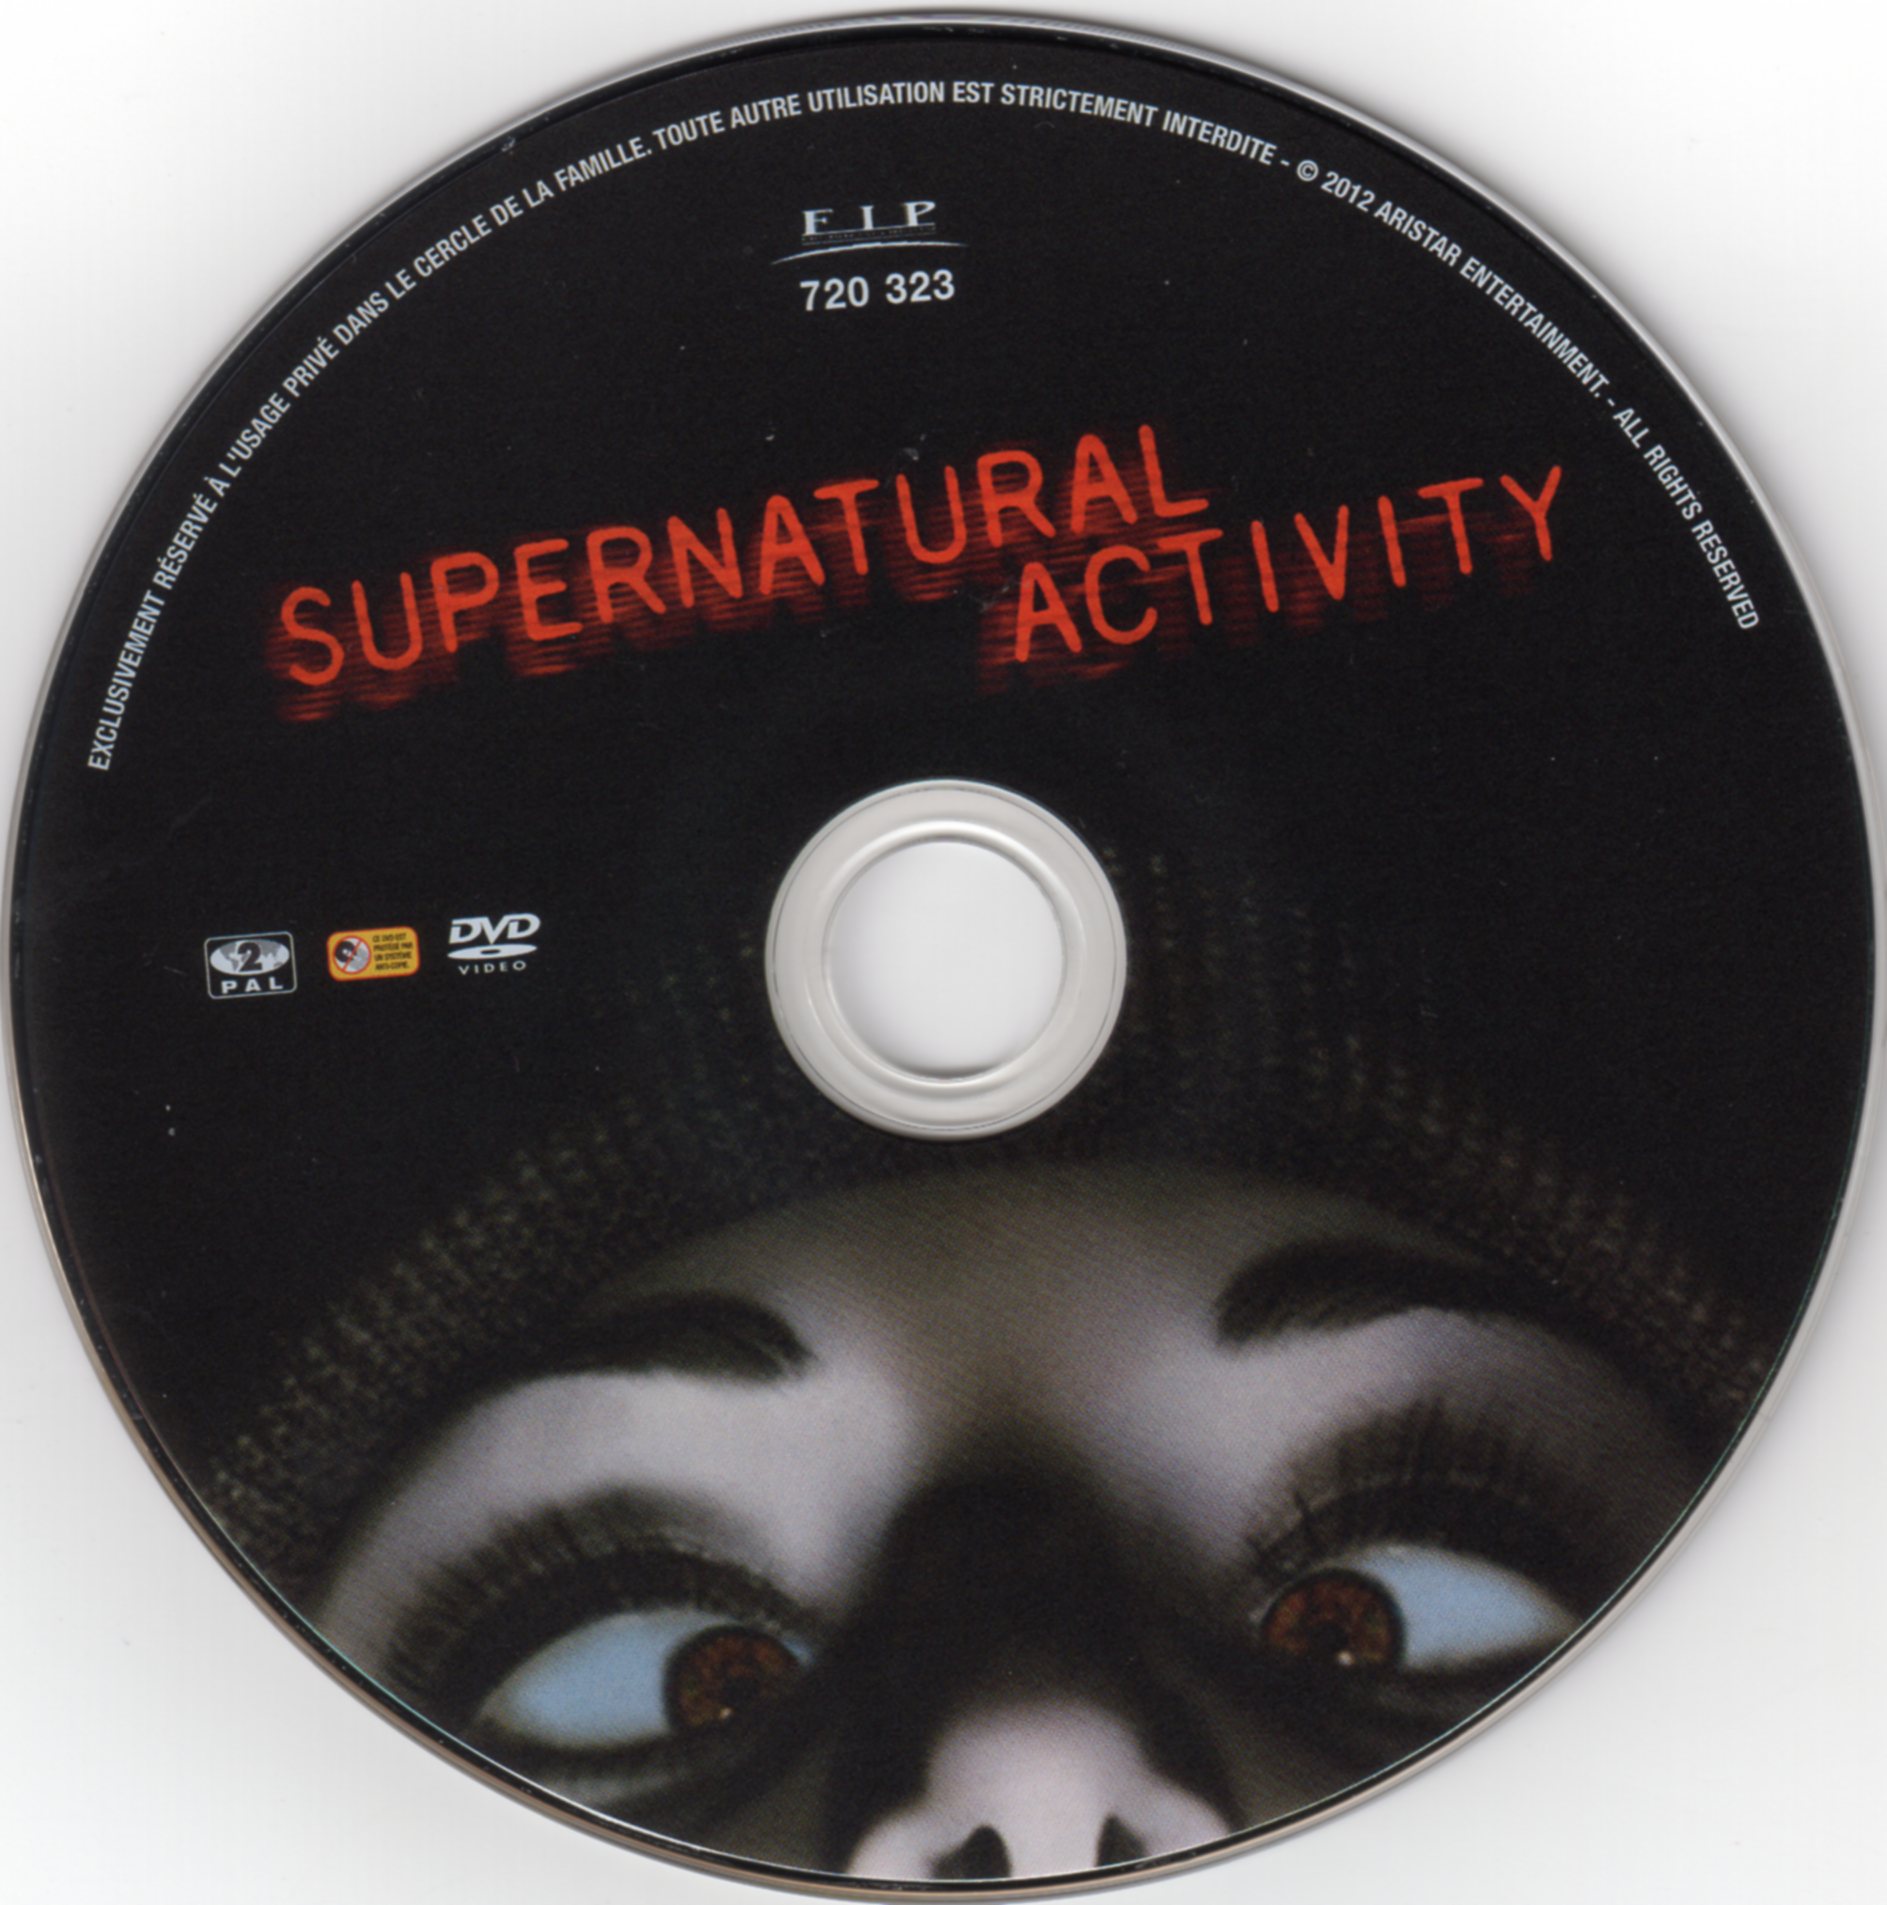 Supernatural activity